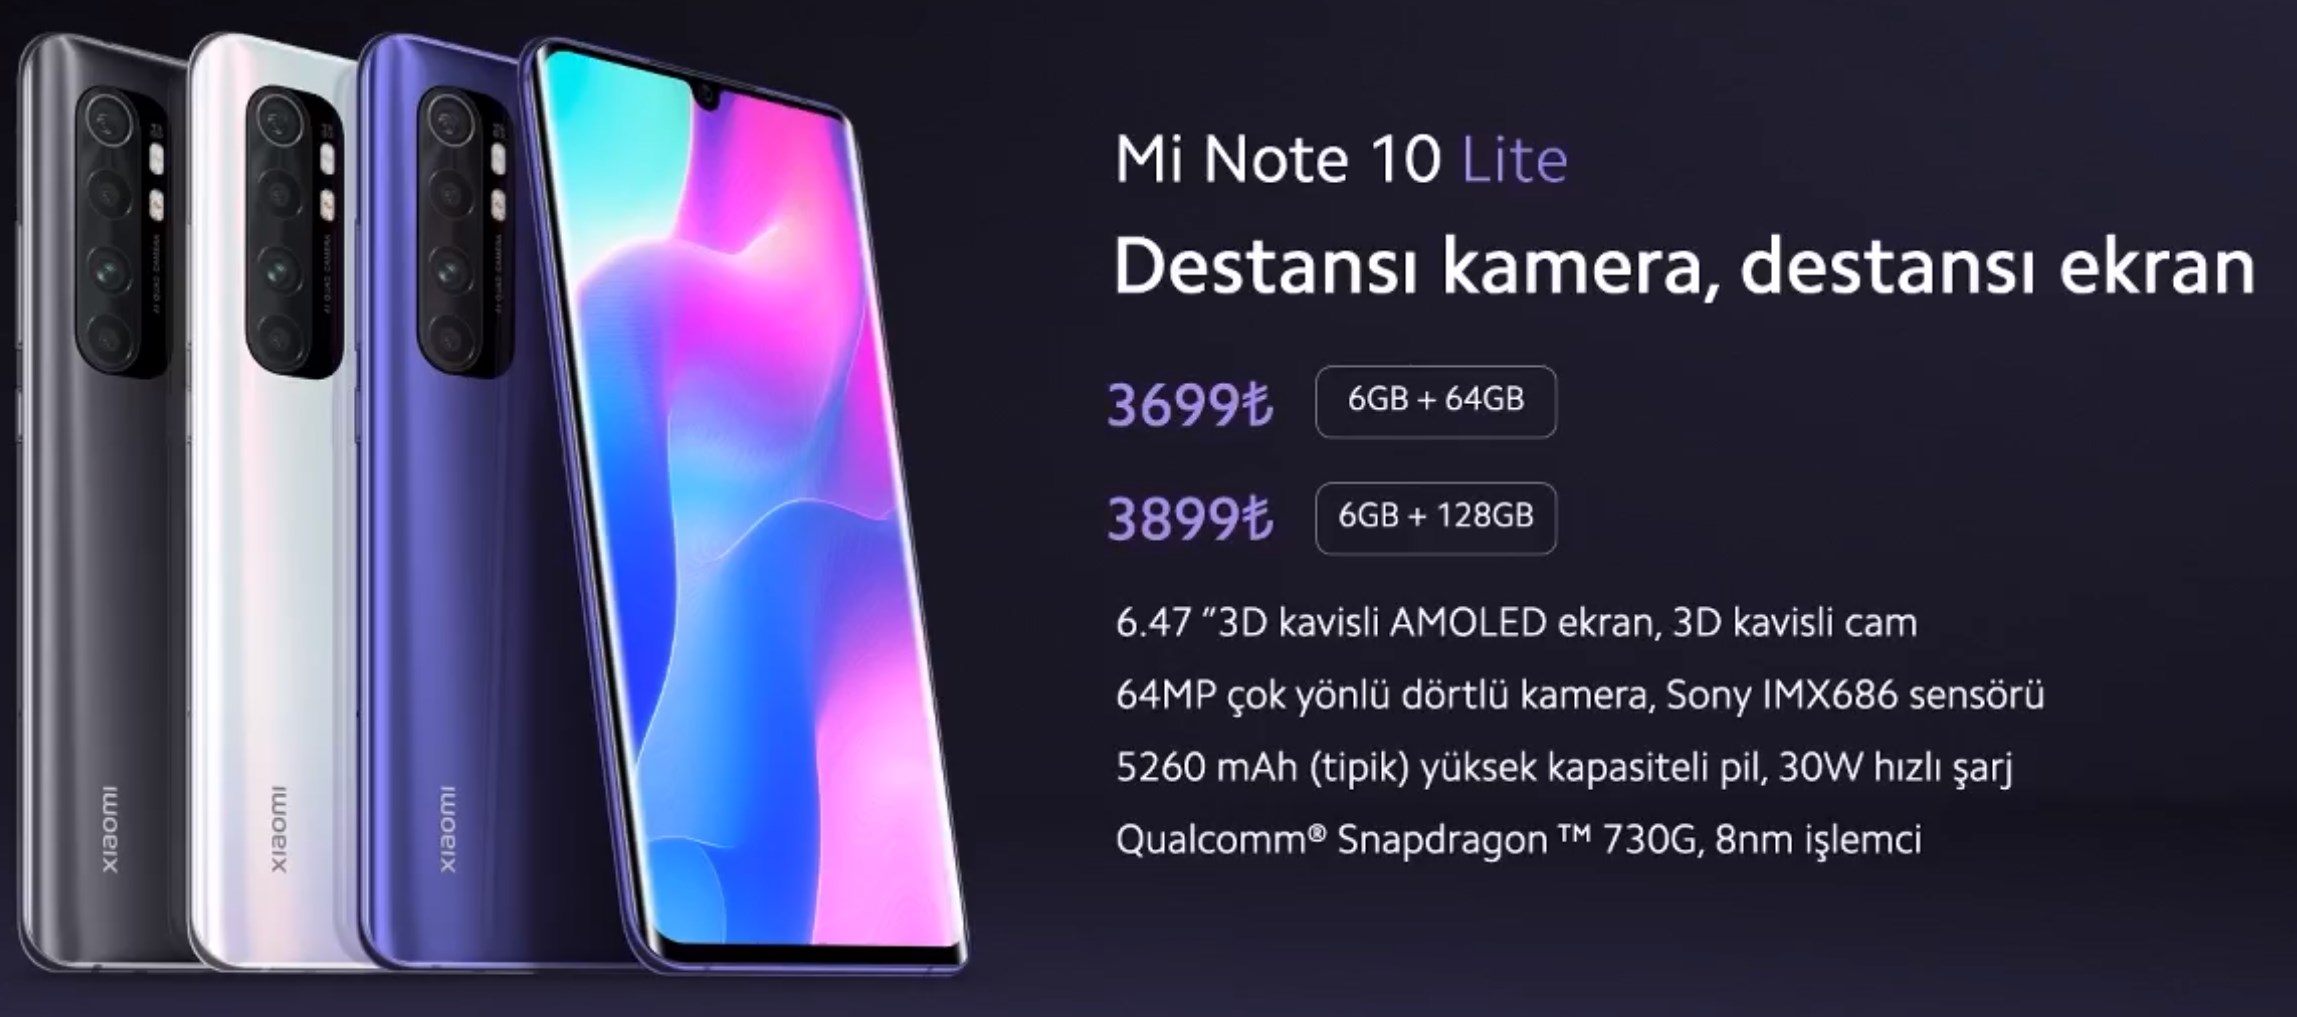 Xiaomi Mi Note 10 Lite Характеристики Цена